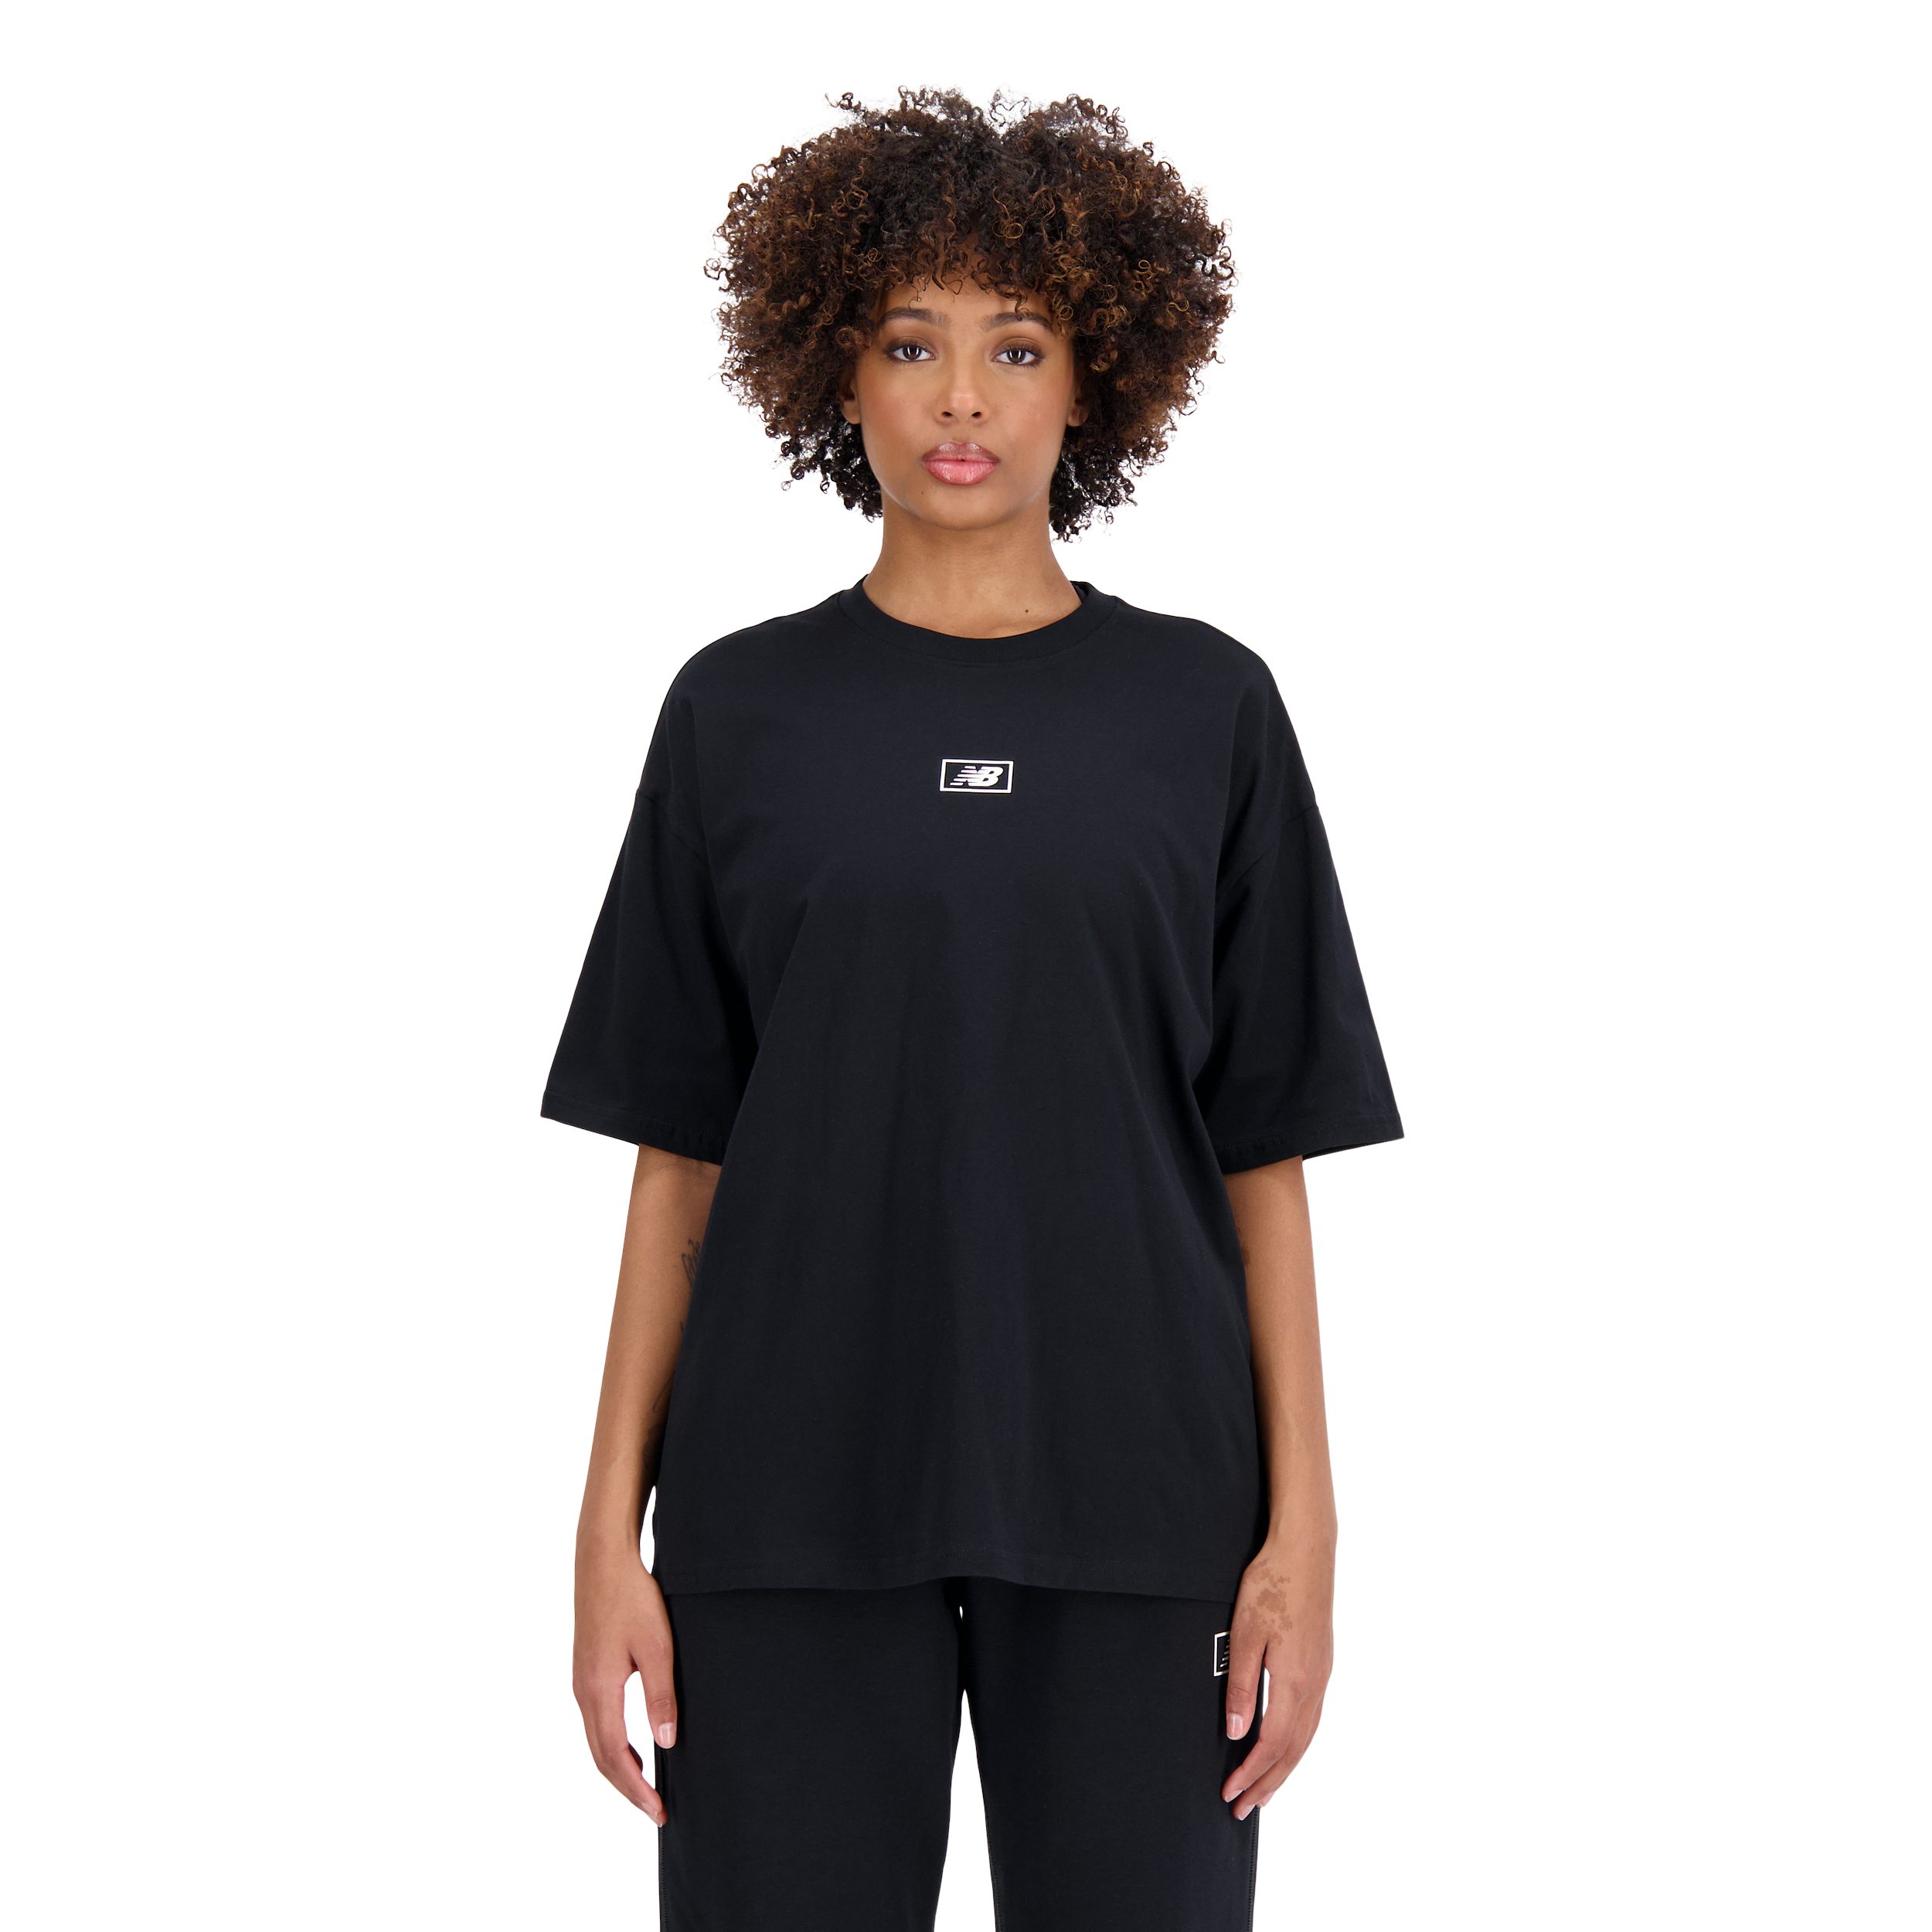 New (001) black Balance T-Shirt